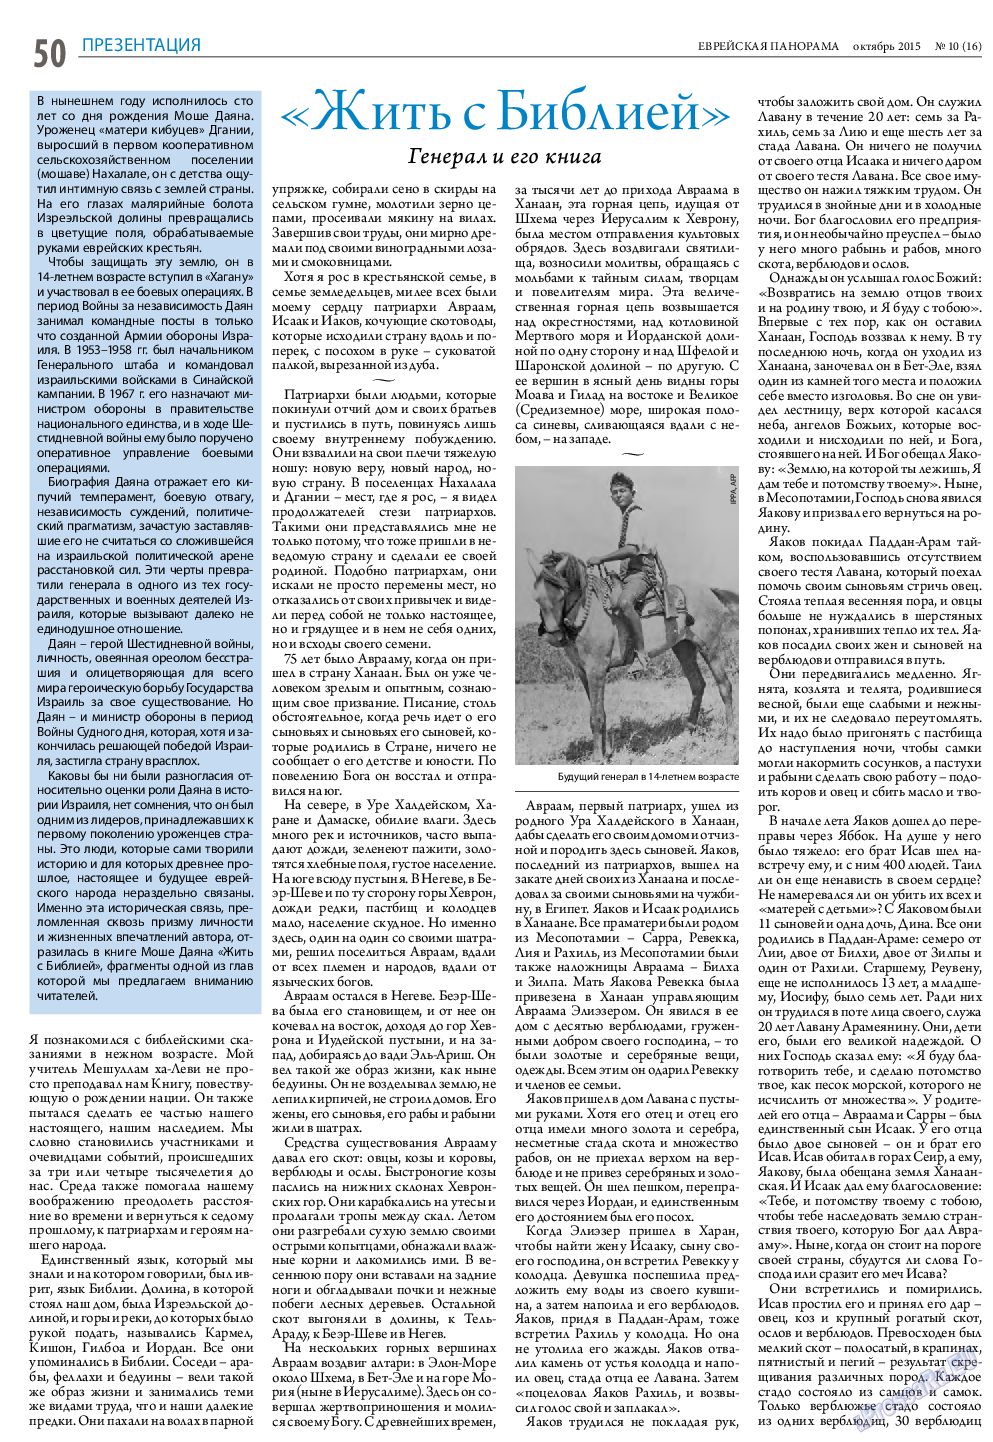 Еврейская панорама, газета. 2015 №10 стр.50